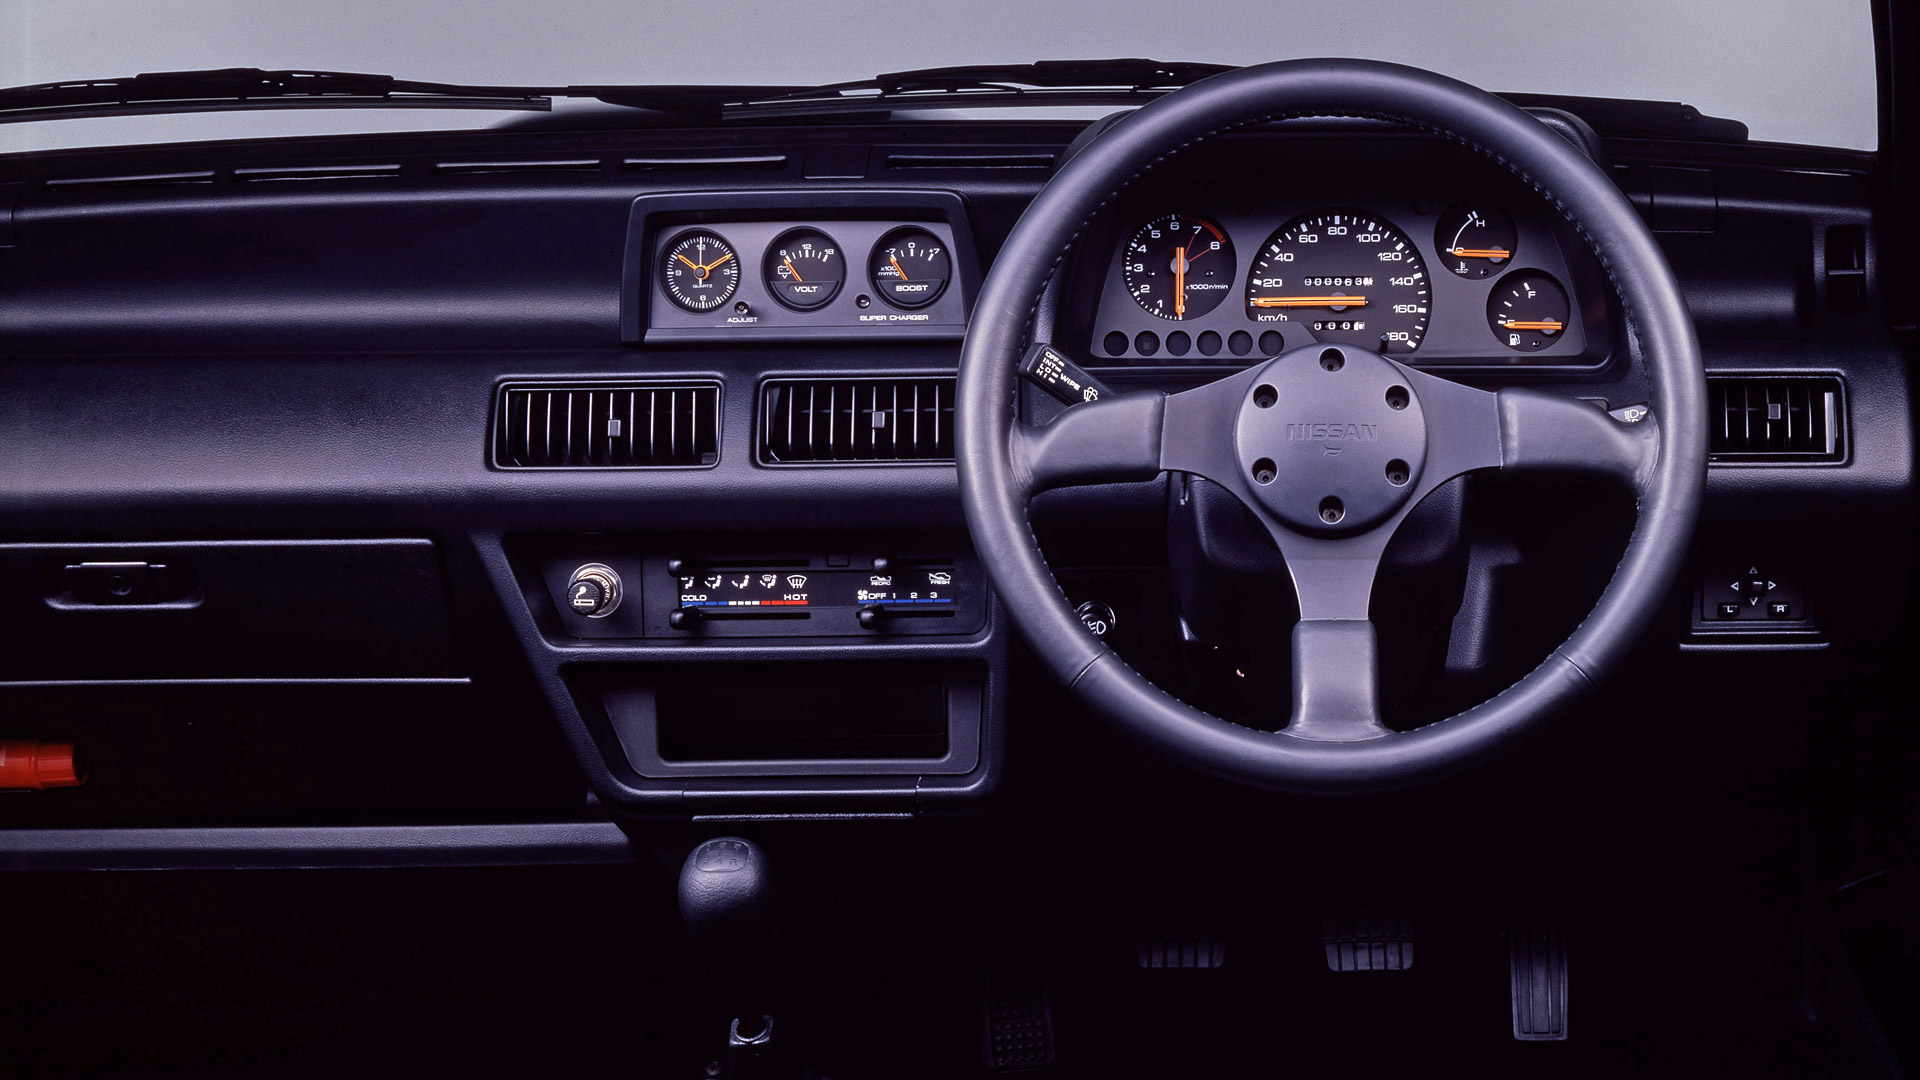  1989 Nissan March Super Turbo Wallpaper.